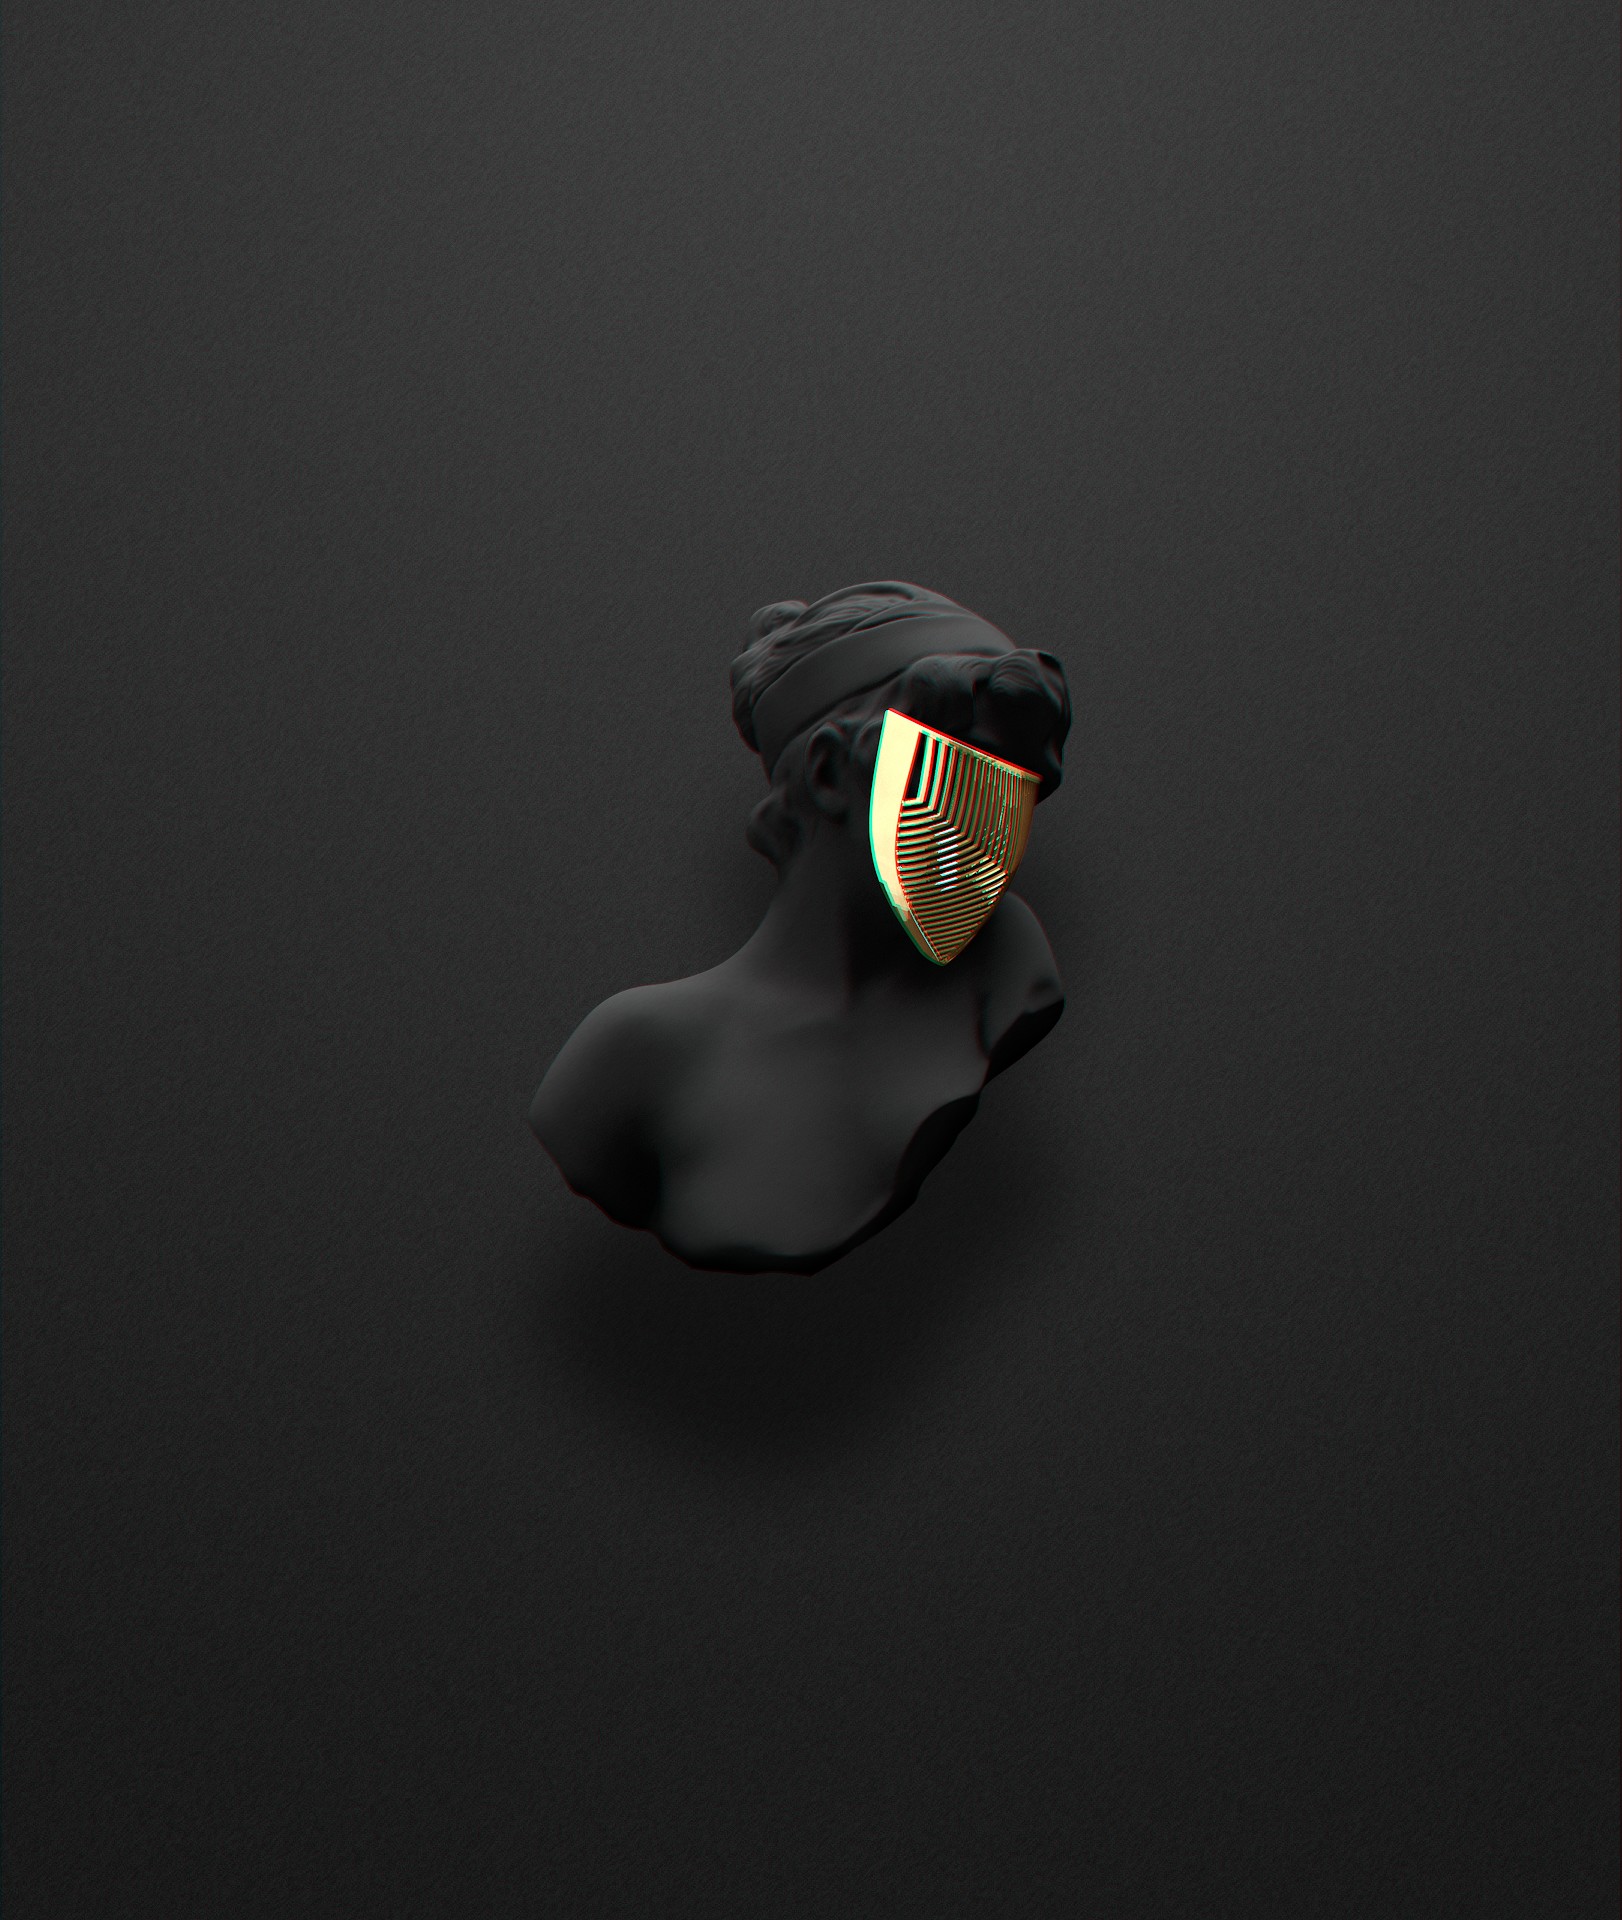  black  Sculpture Mask  Minimalism Gold Wallpapers  HD  